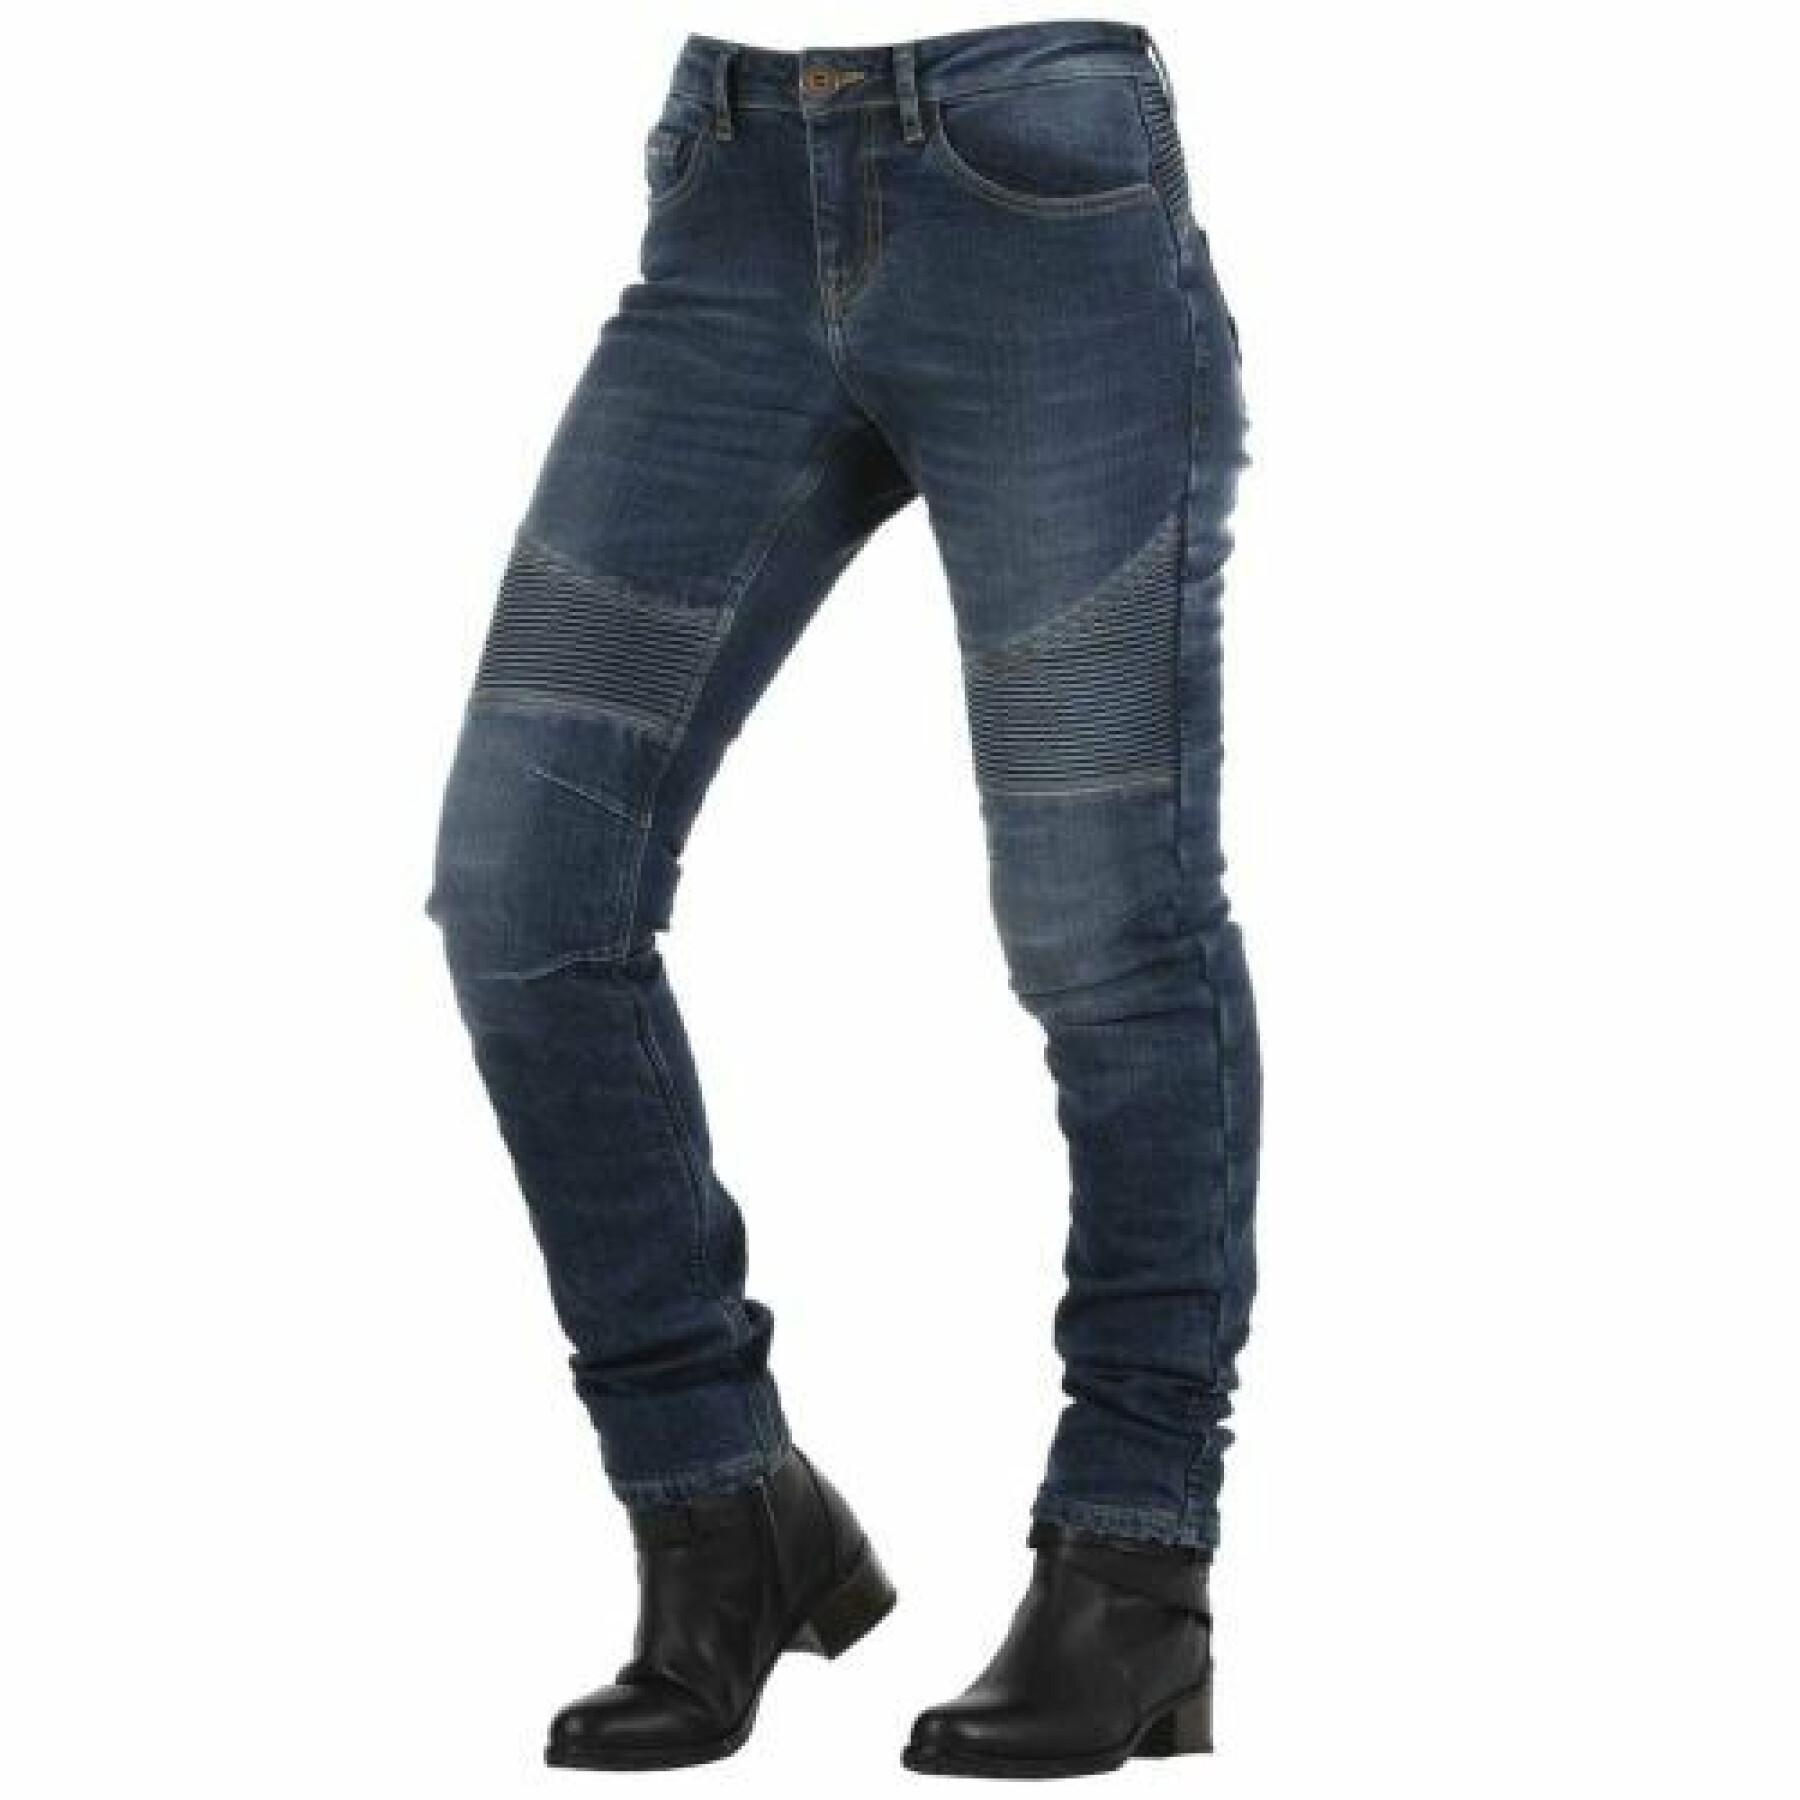 Motorrad-Jeans für Frauen Overlap Imola Ce